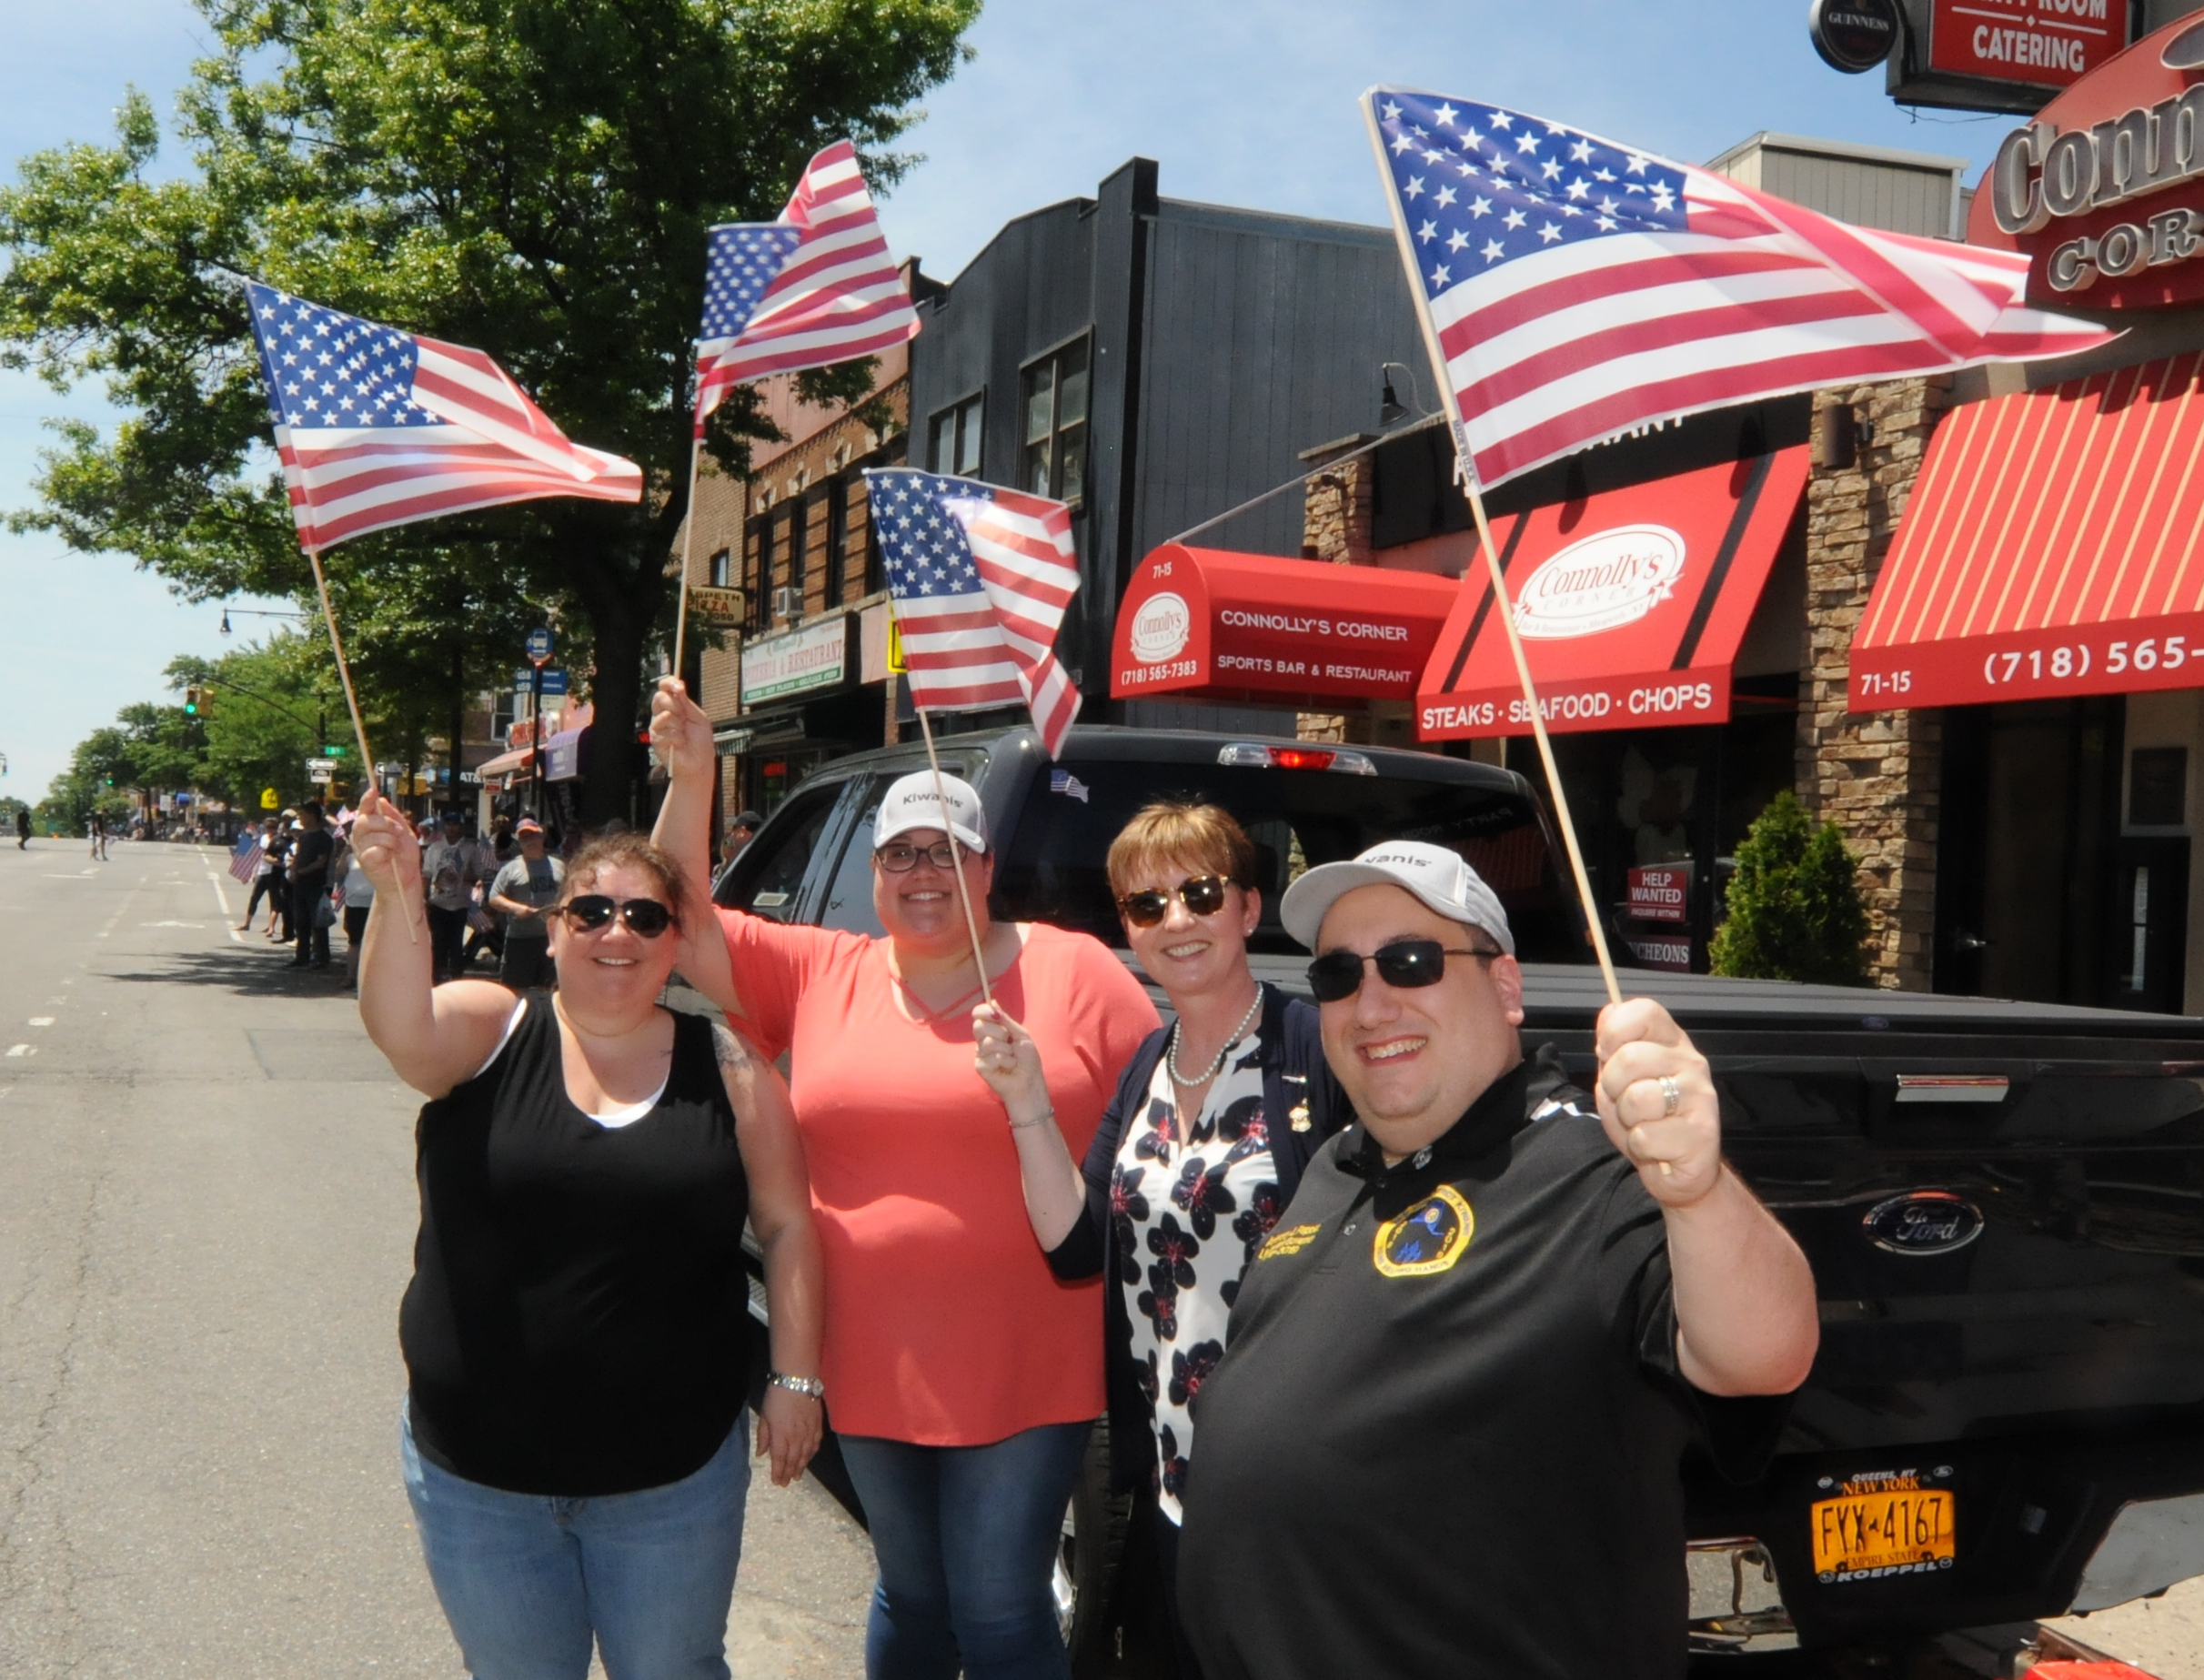  Paradegoers wave their American flags.   